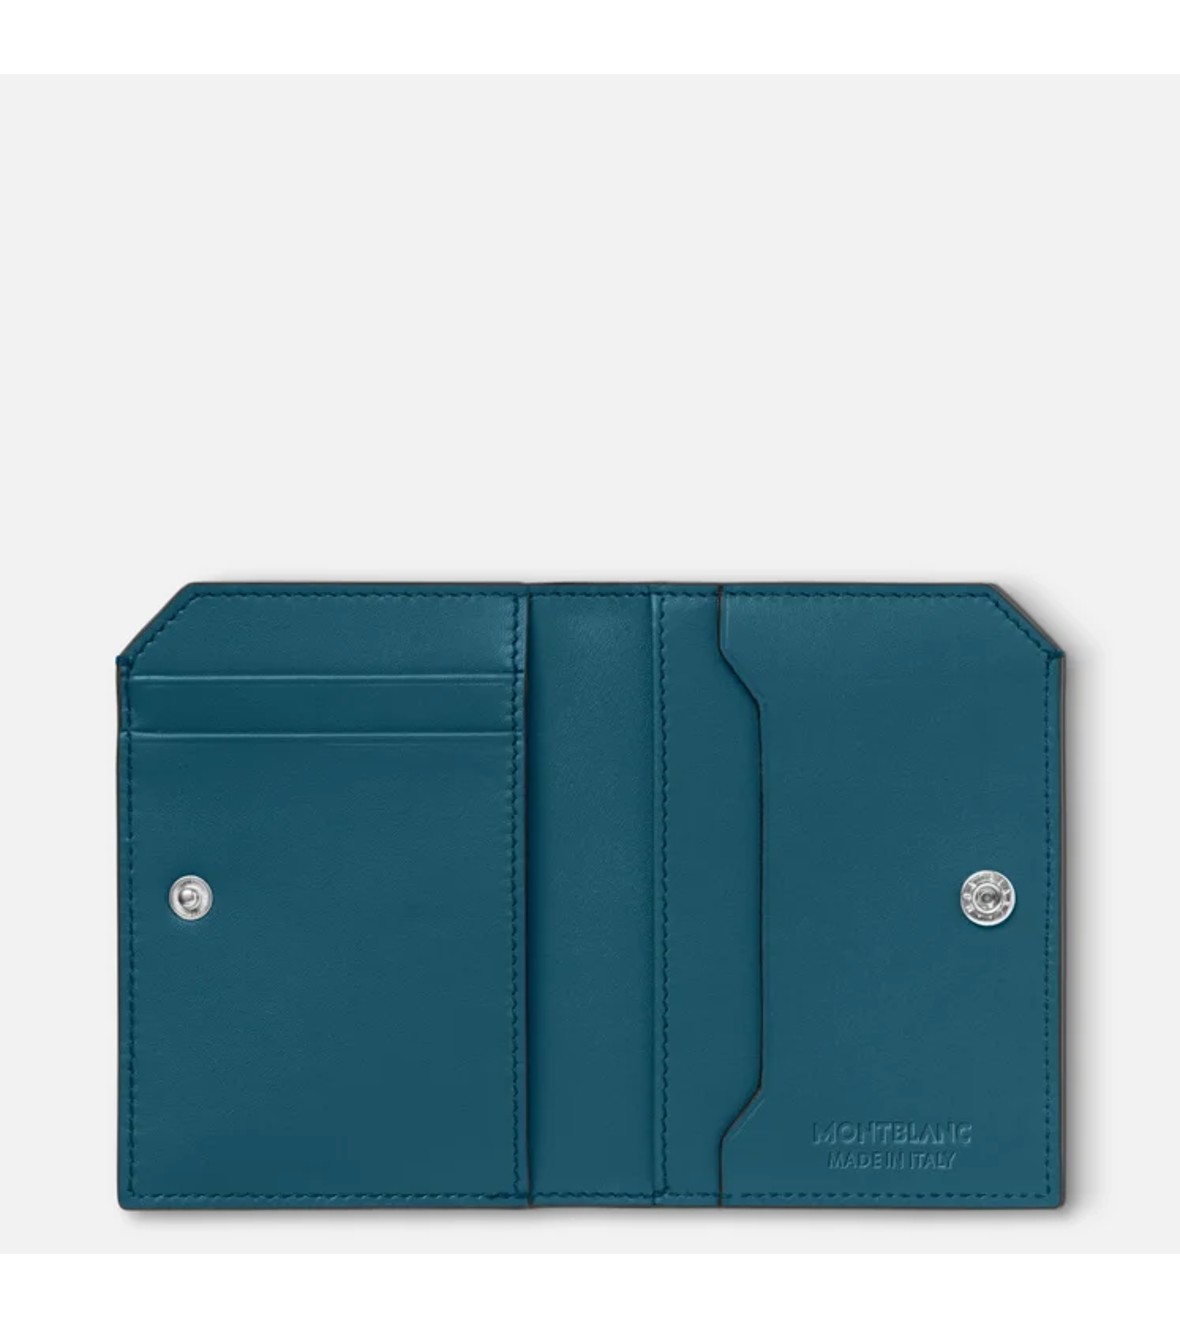 Meisterstück Selection Soft mini wallet 4cc 131246